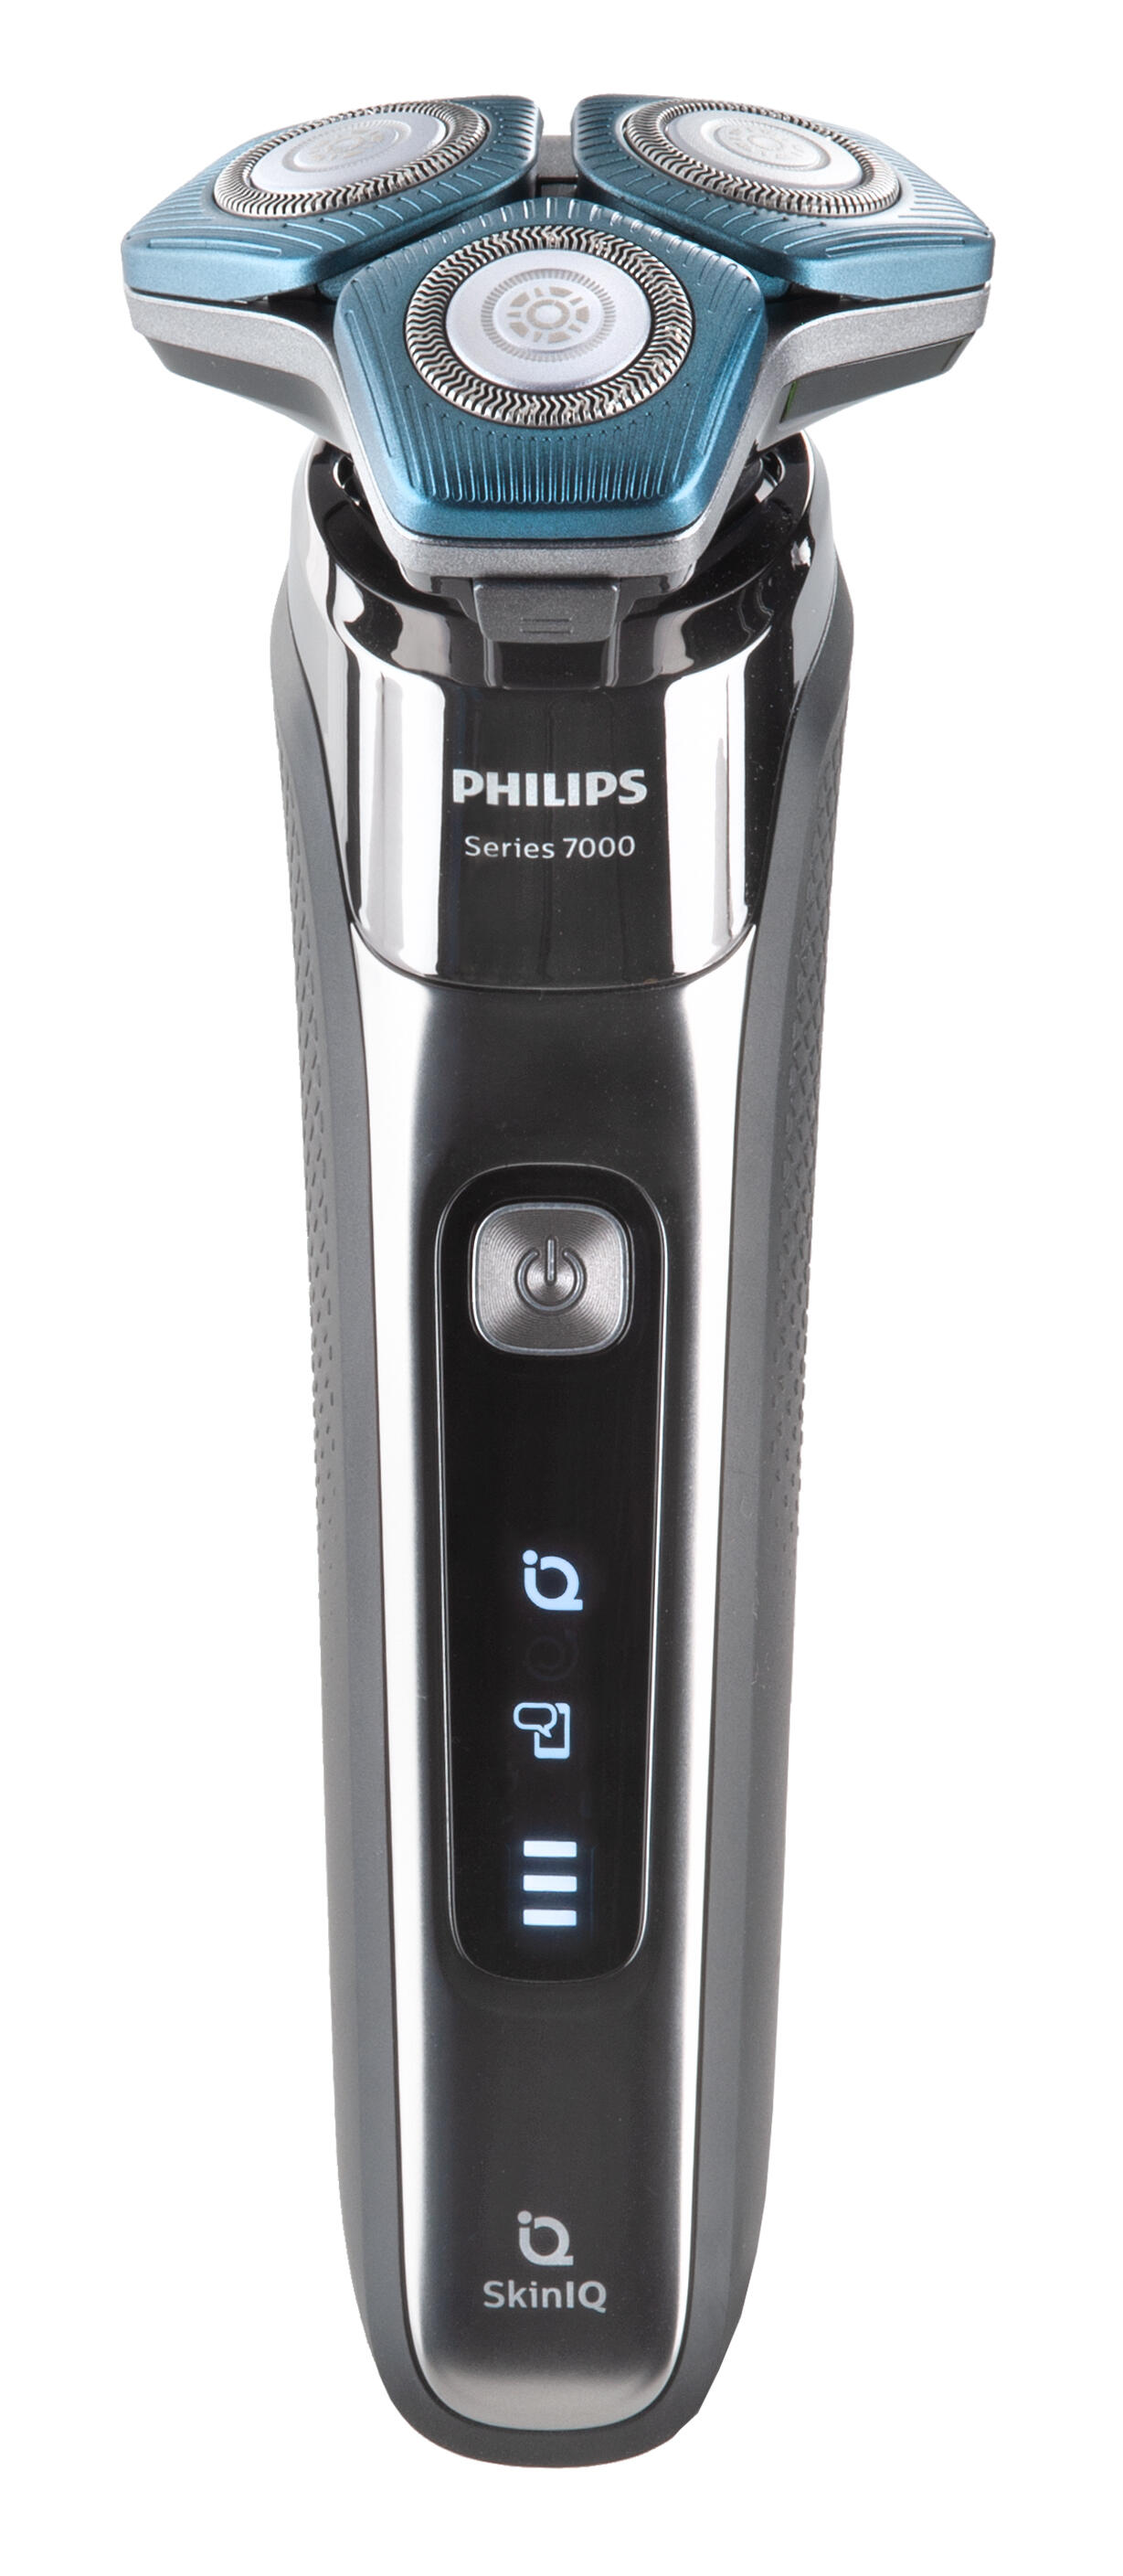 Series 7000 S7786/55 Philips